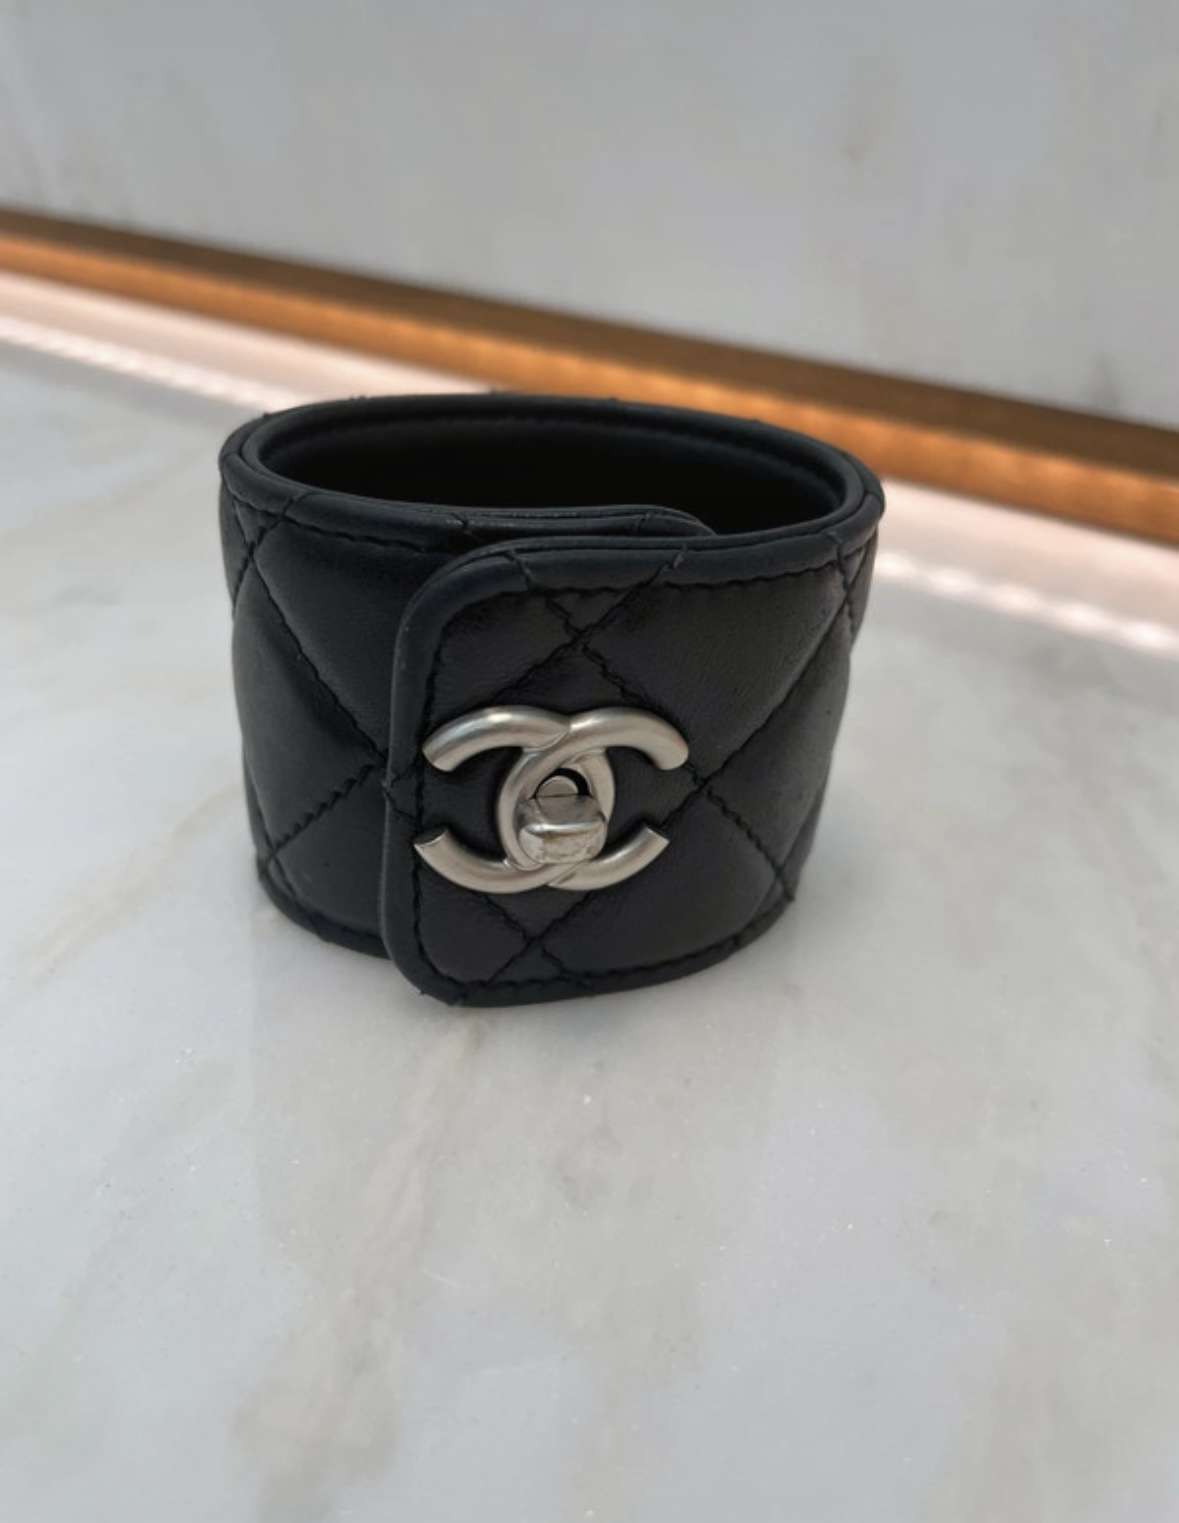 Chanel leather bracelet